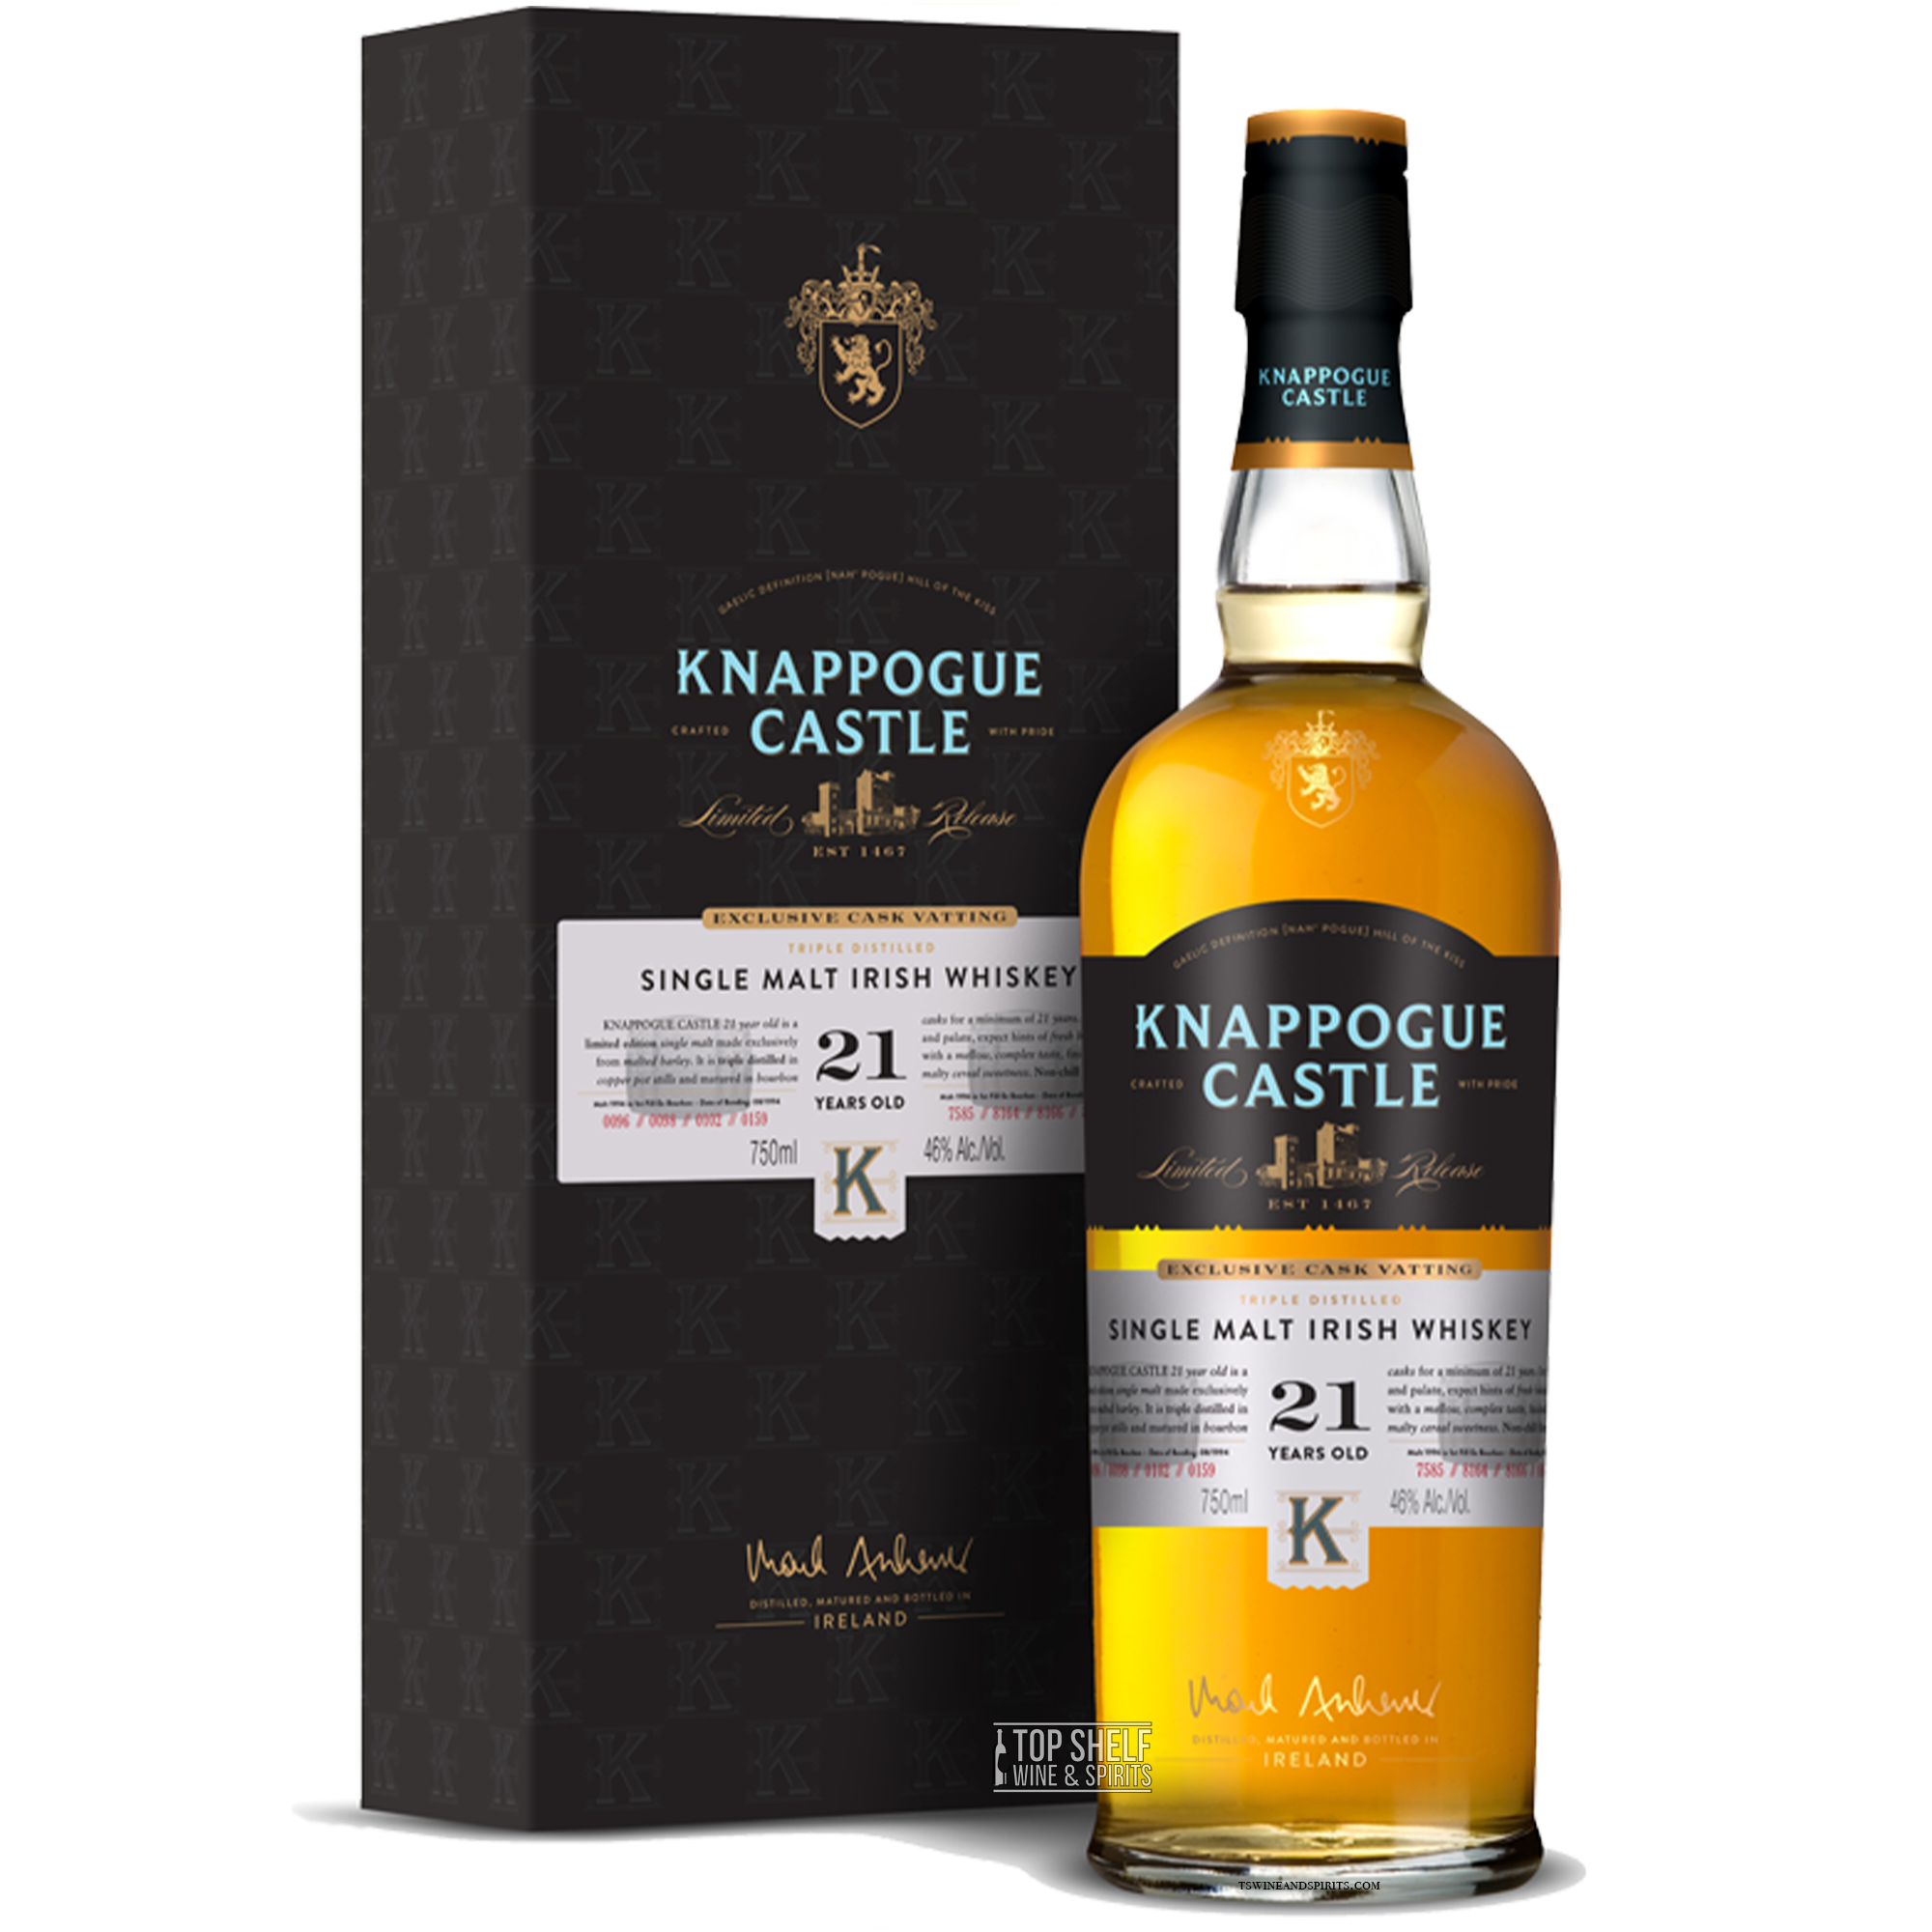 Knappogue Castle 21 Year Single Malt Irish Whiskey (Exclusive Cask Vatting)